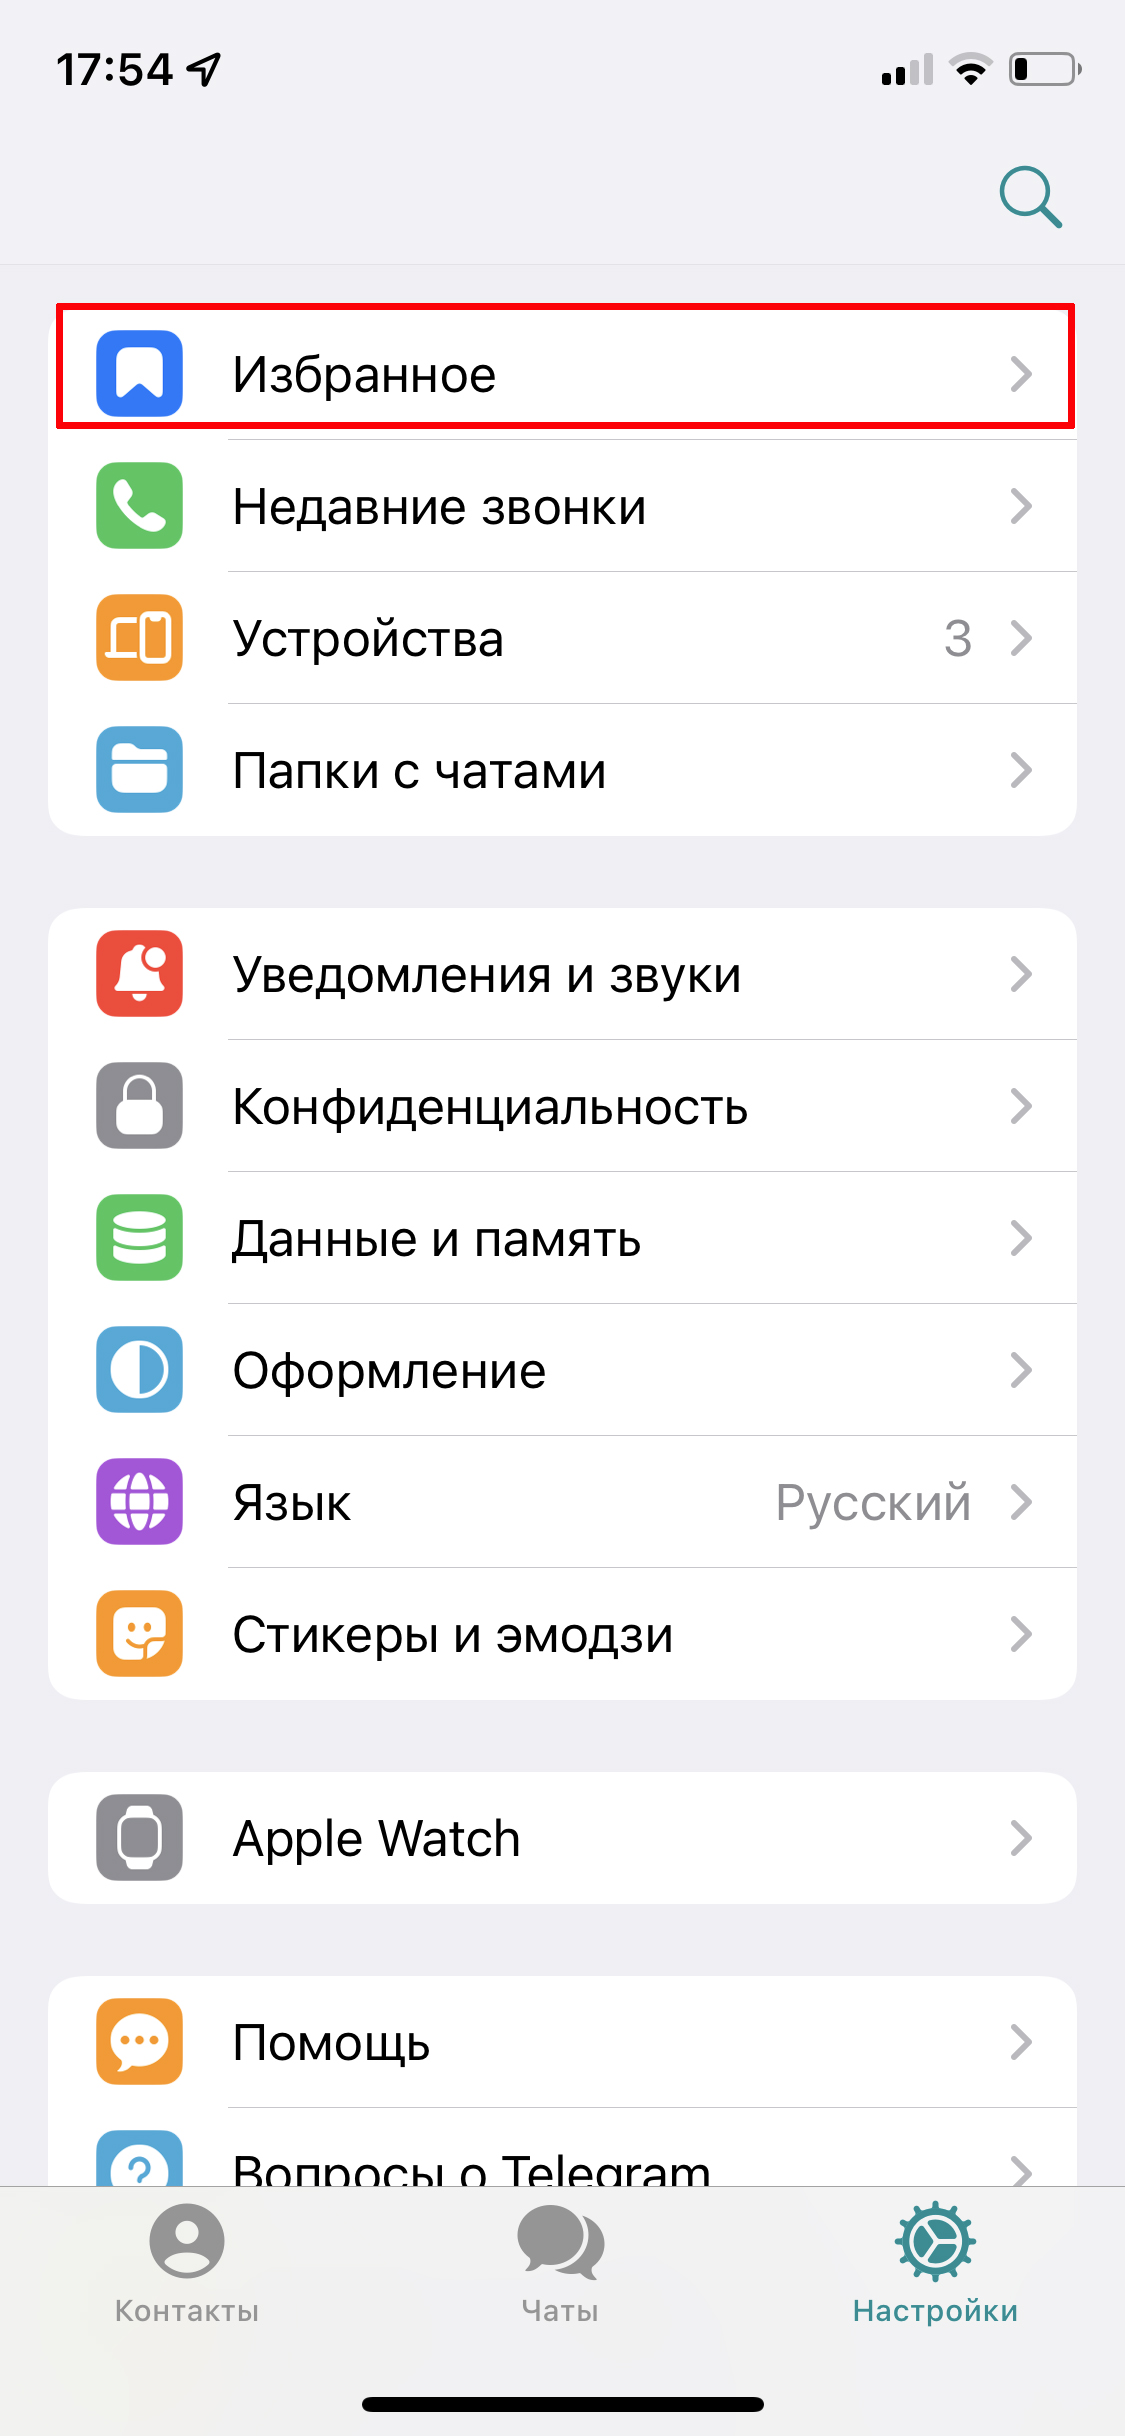 Телеграмм перевести на русский язык андроиде как фото 16